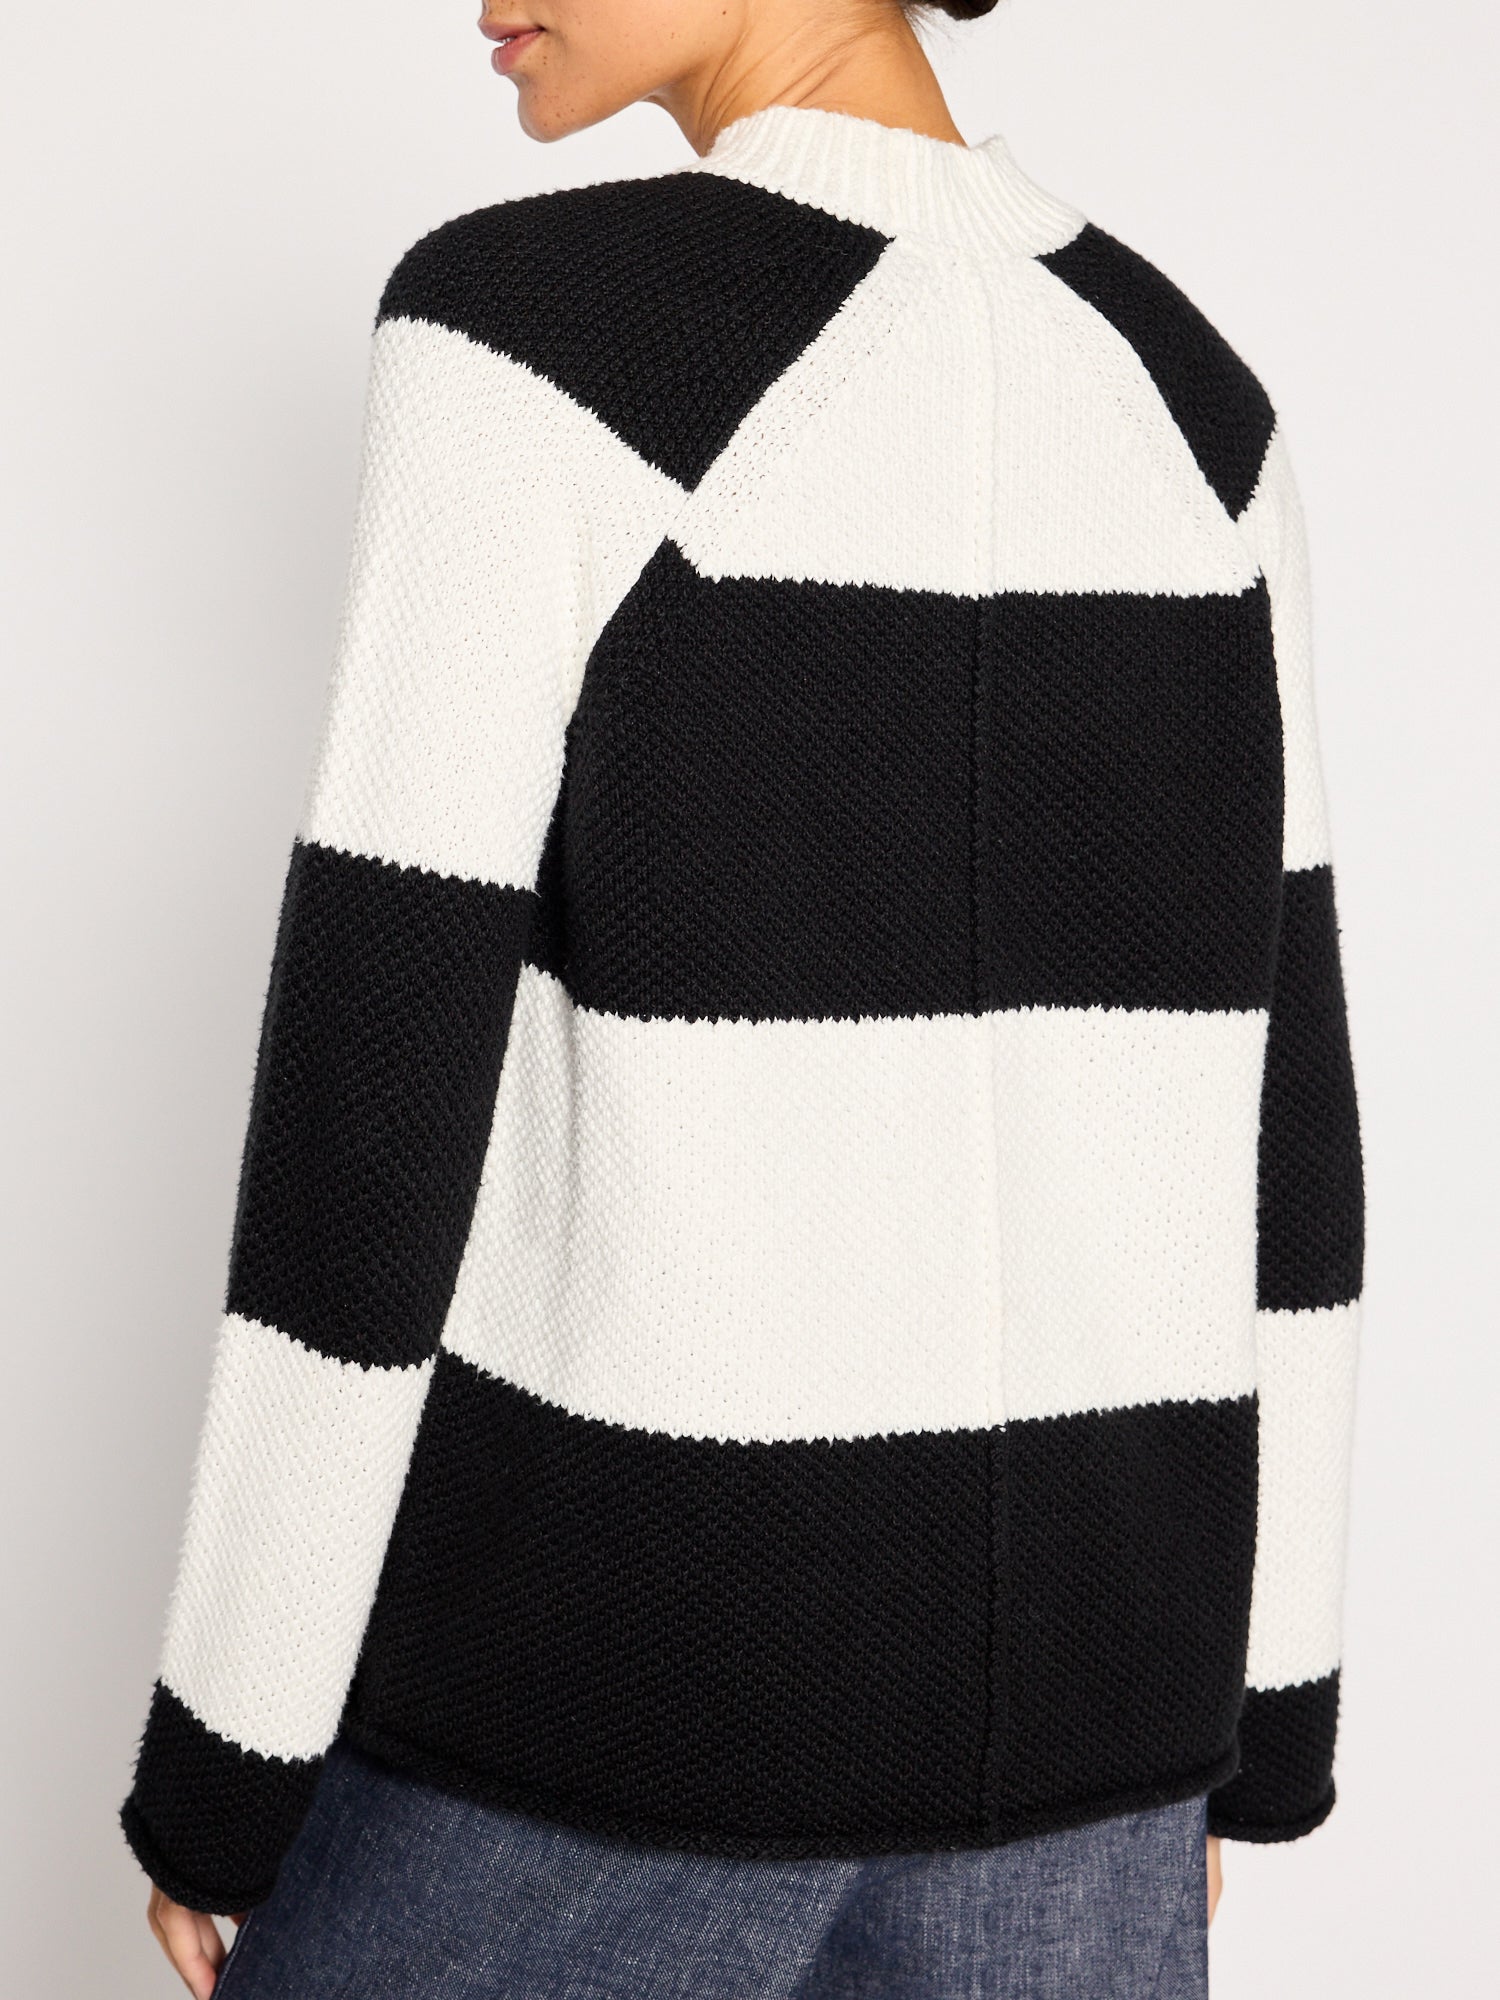 Marco white black stripe cotton crewneck sweater back view